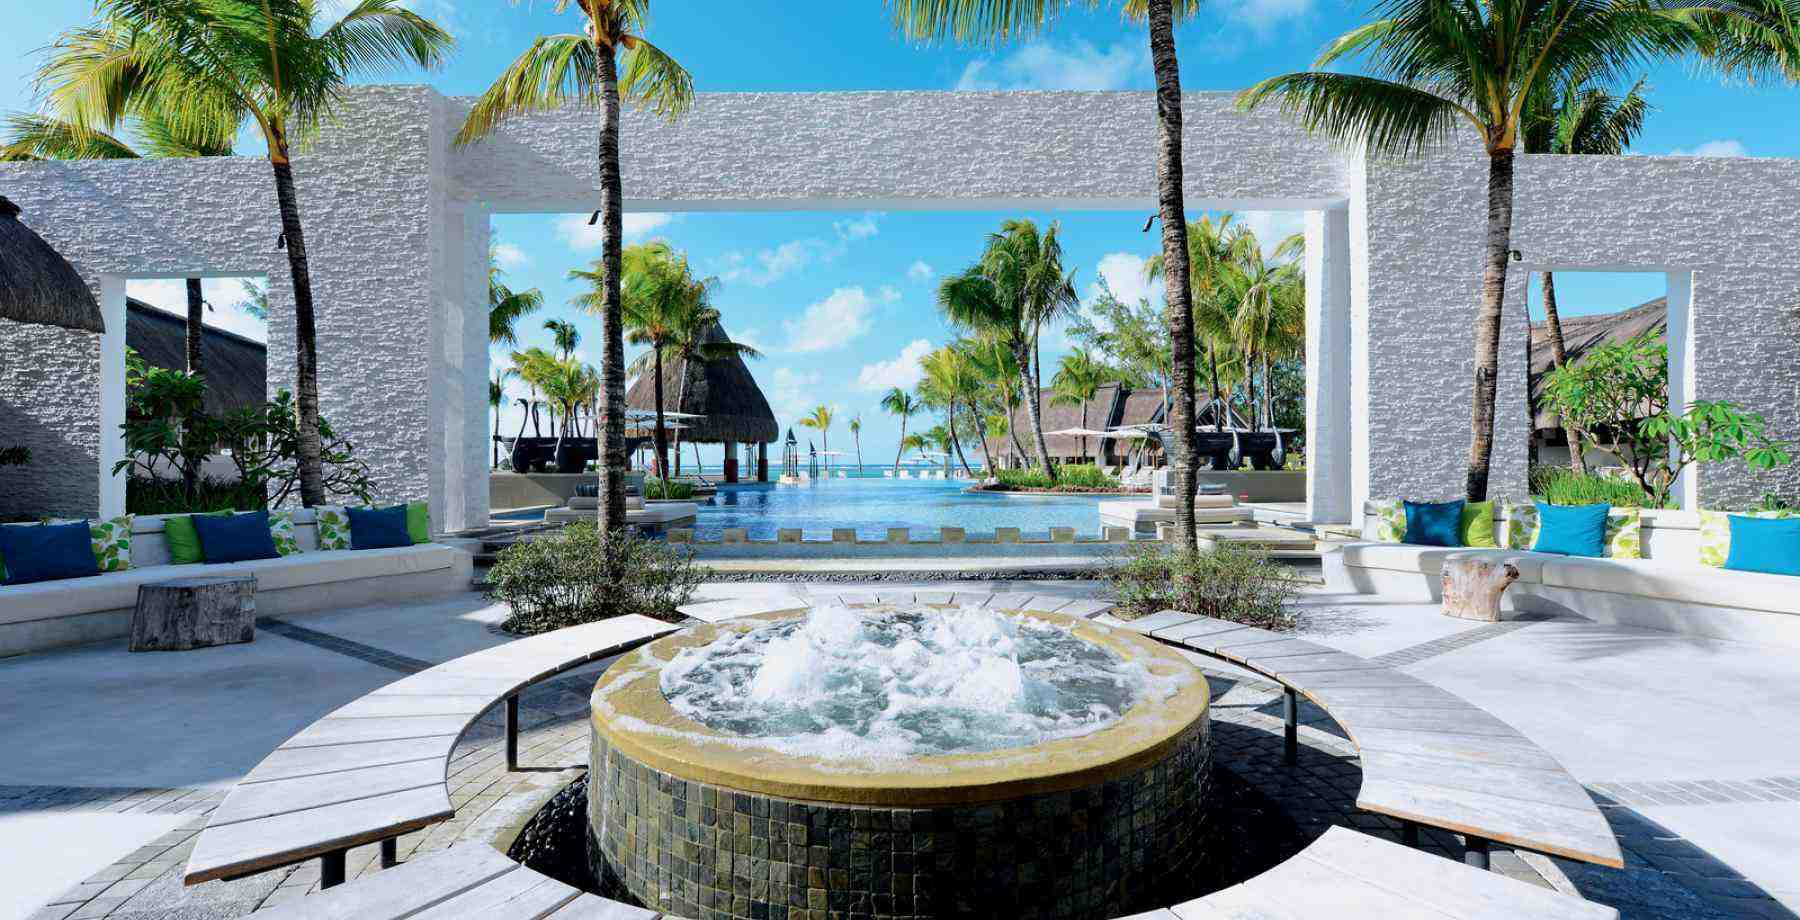 Ambre mauritius pool view